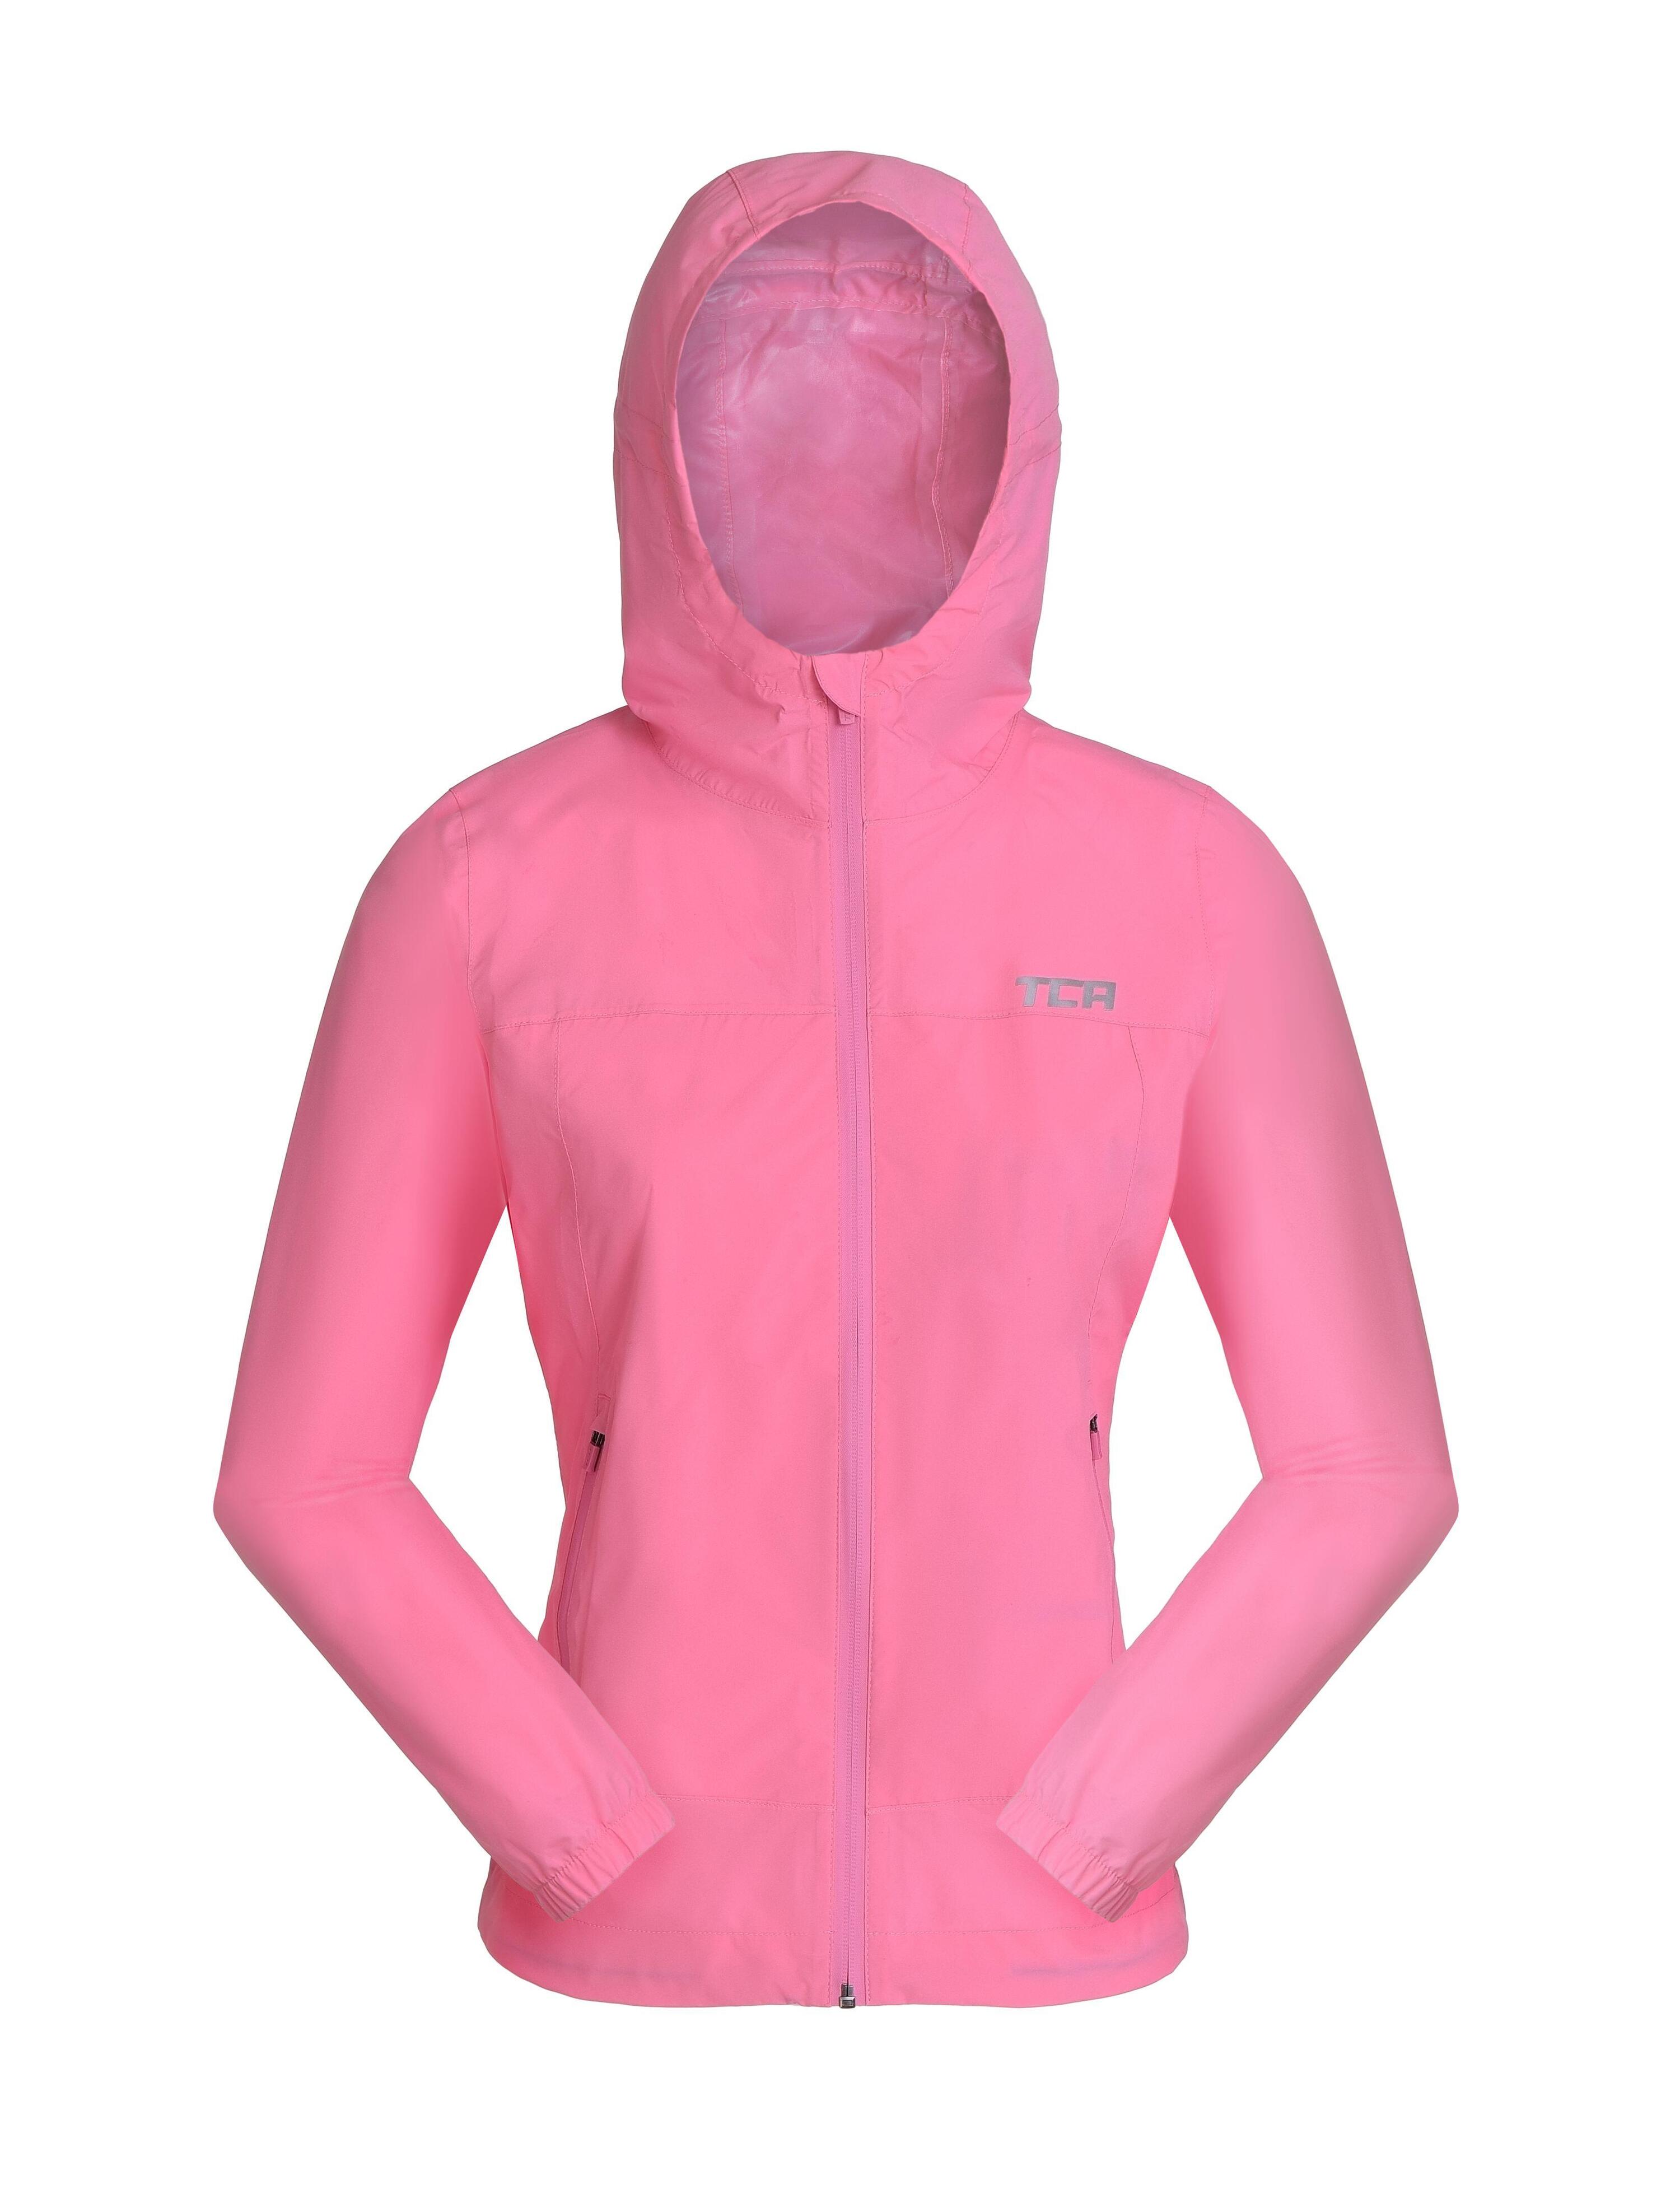 Girls' AirLite Rain Jacket with Zip Pockets - Sachet Pink 2/4